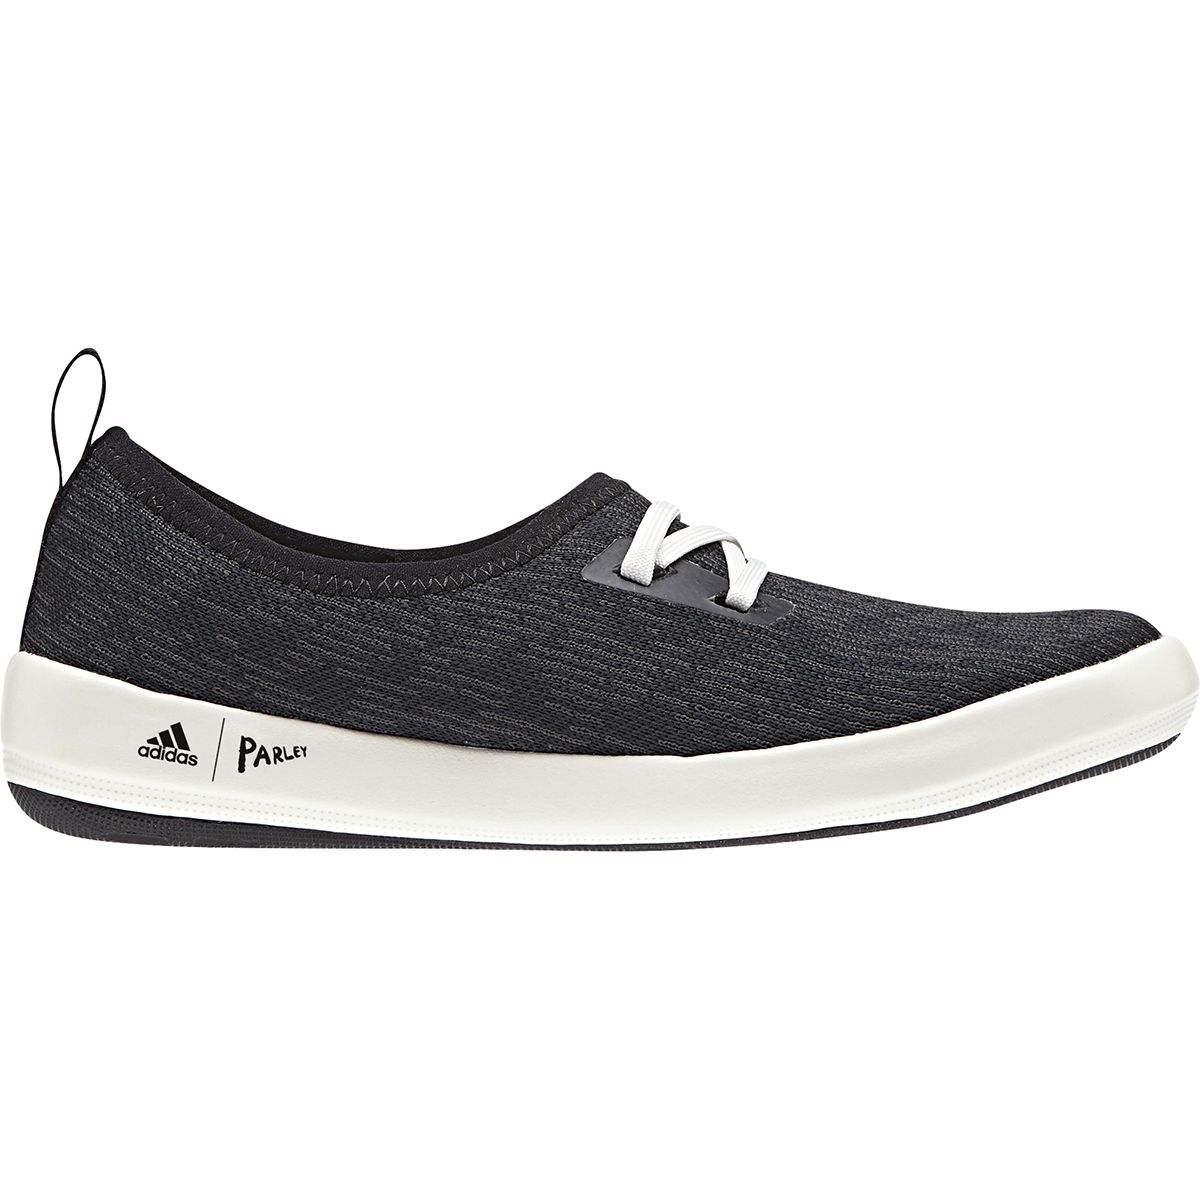 Adidas Outdoor CC Boat Sleek Parley Water Shoe - Footwear